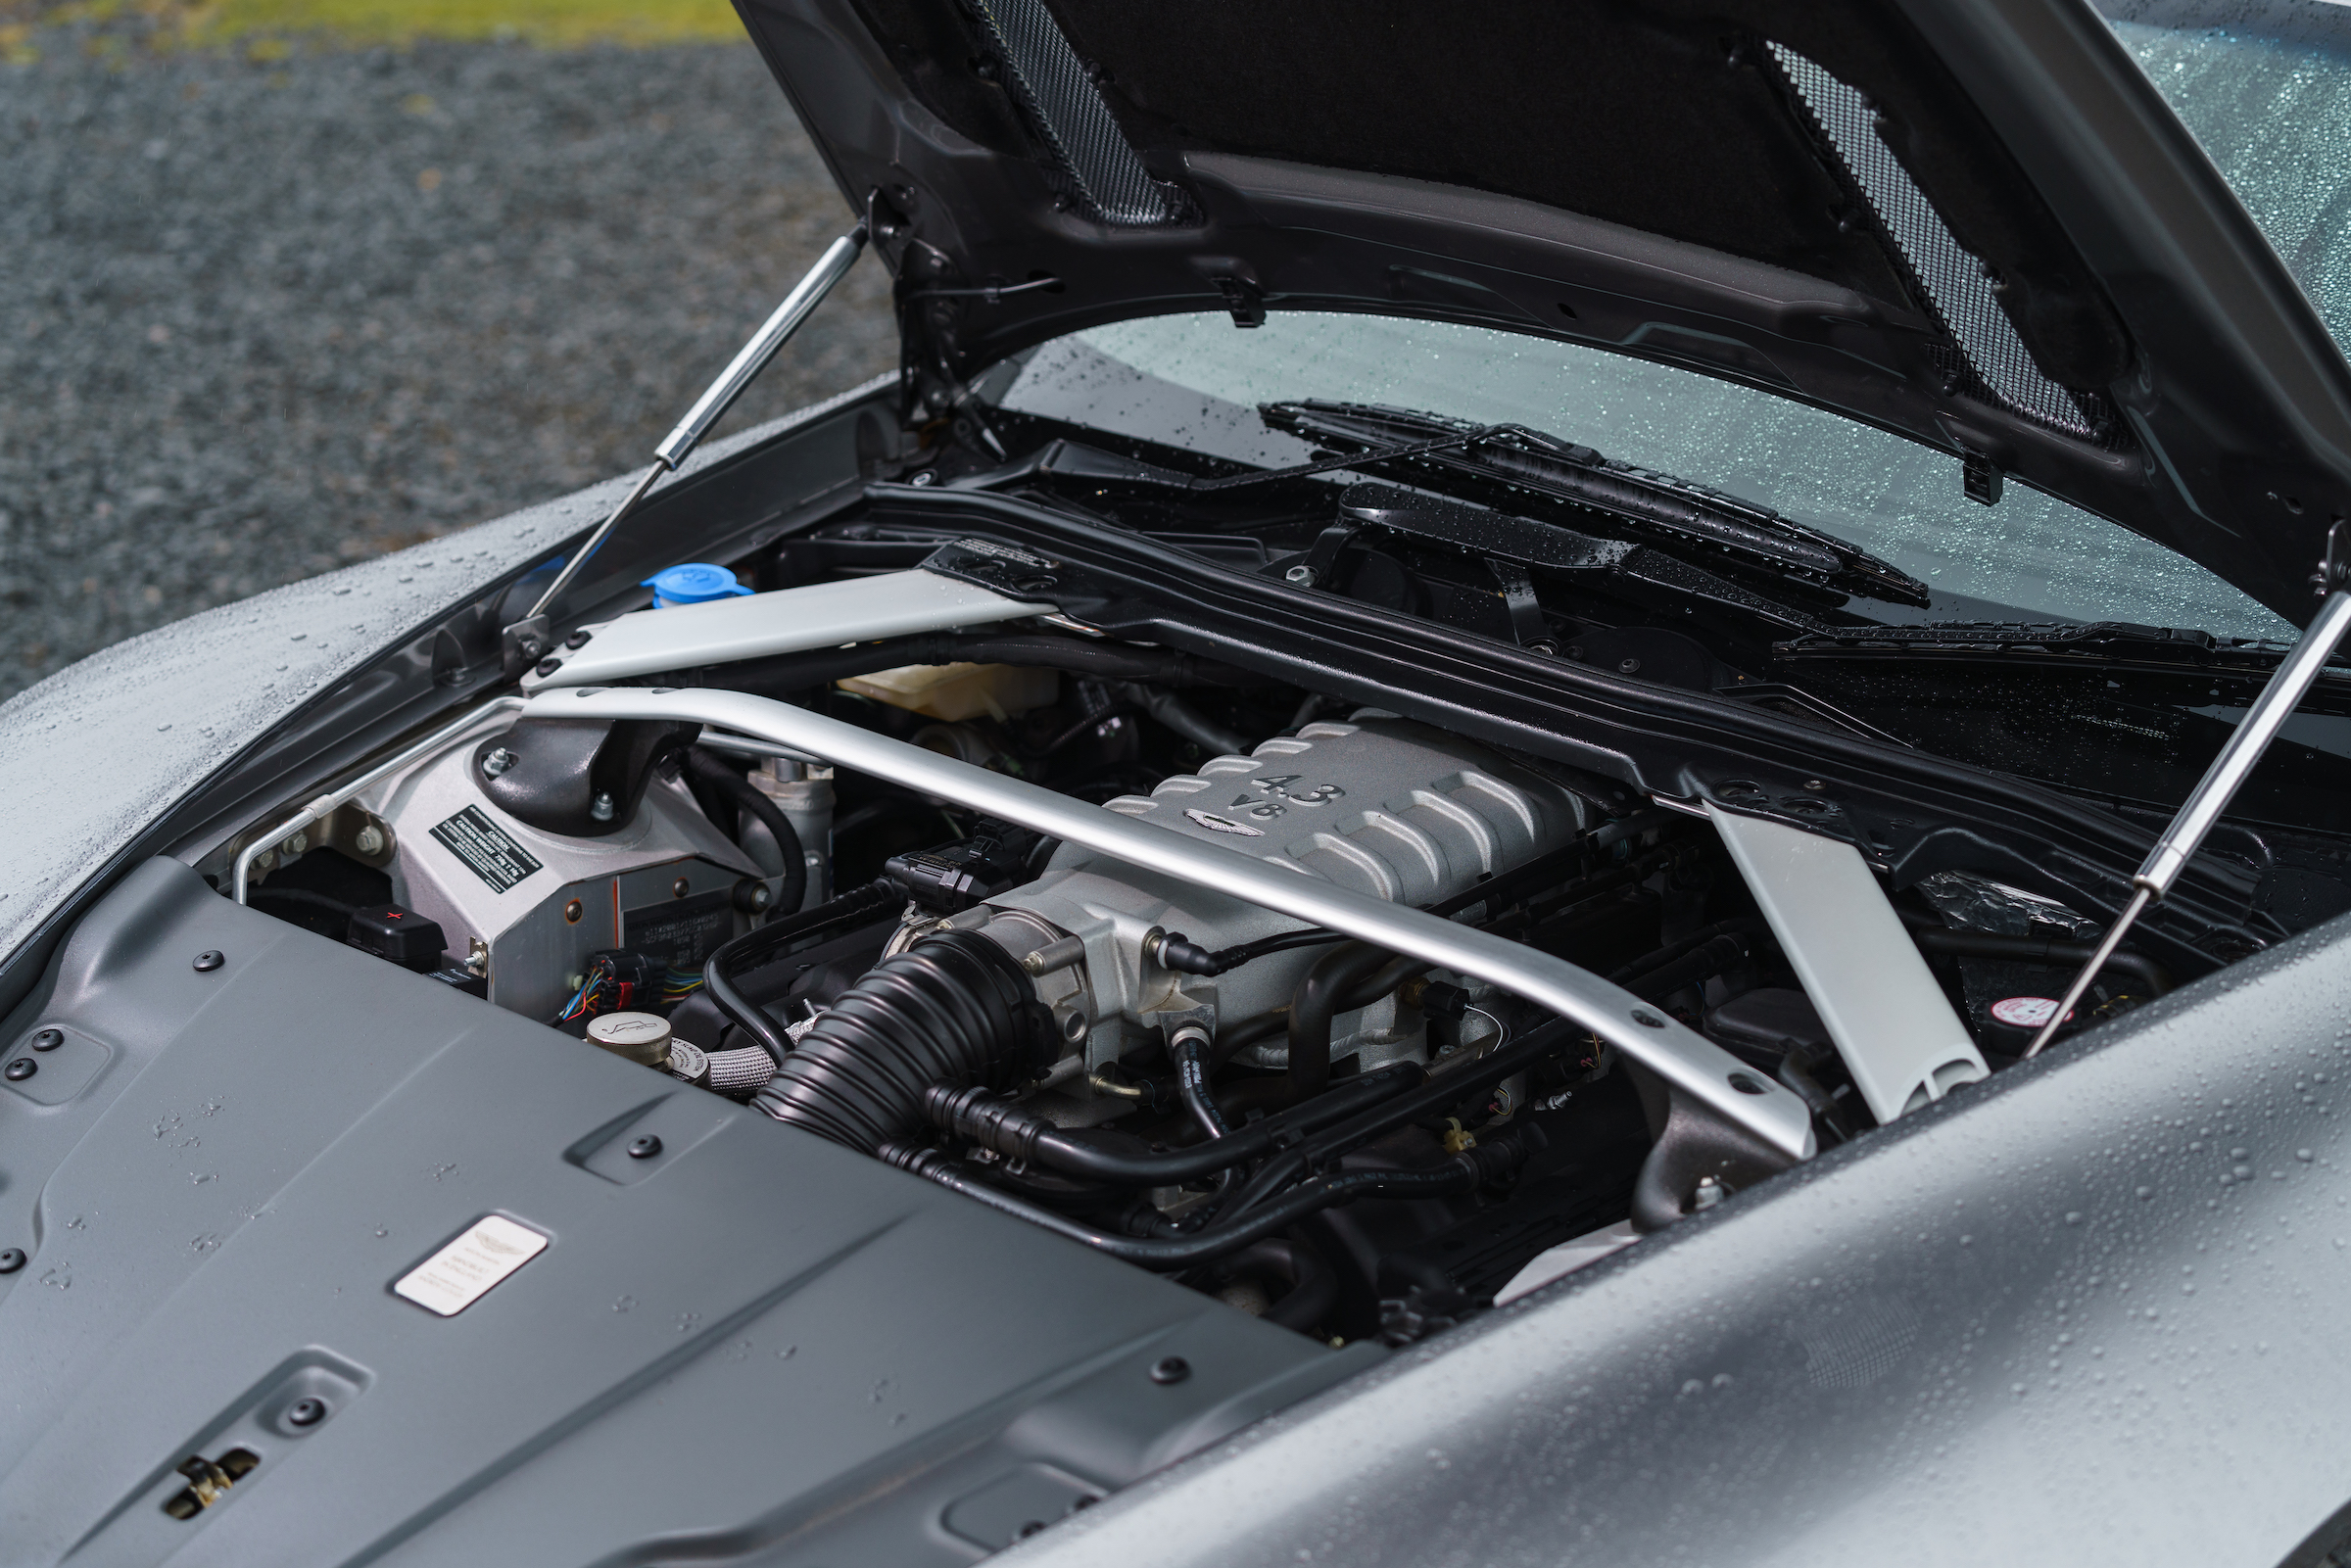 Aston Martin V8 Vantage engine